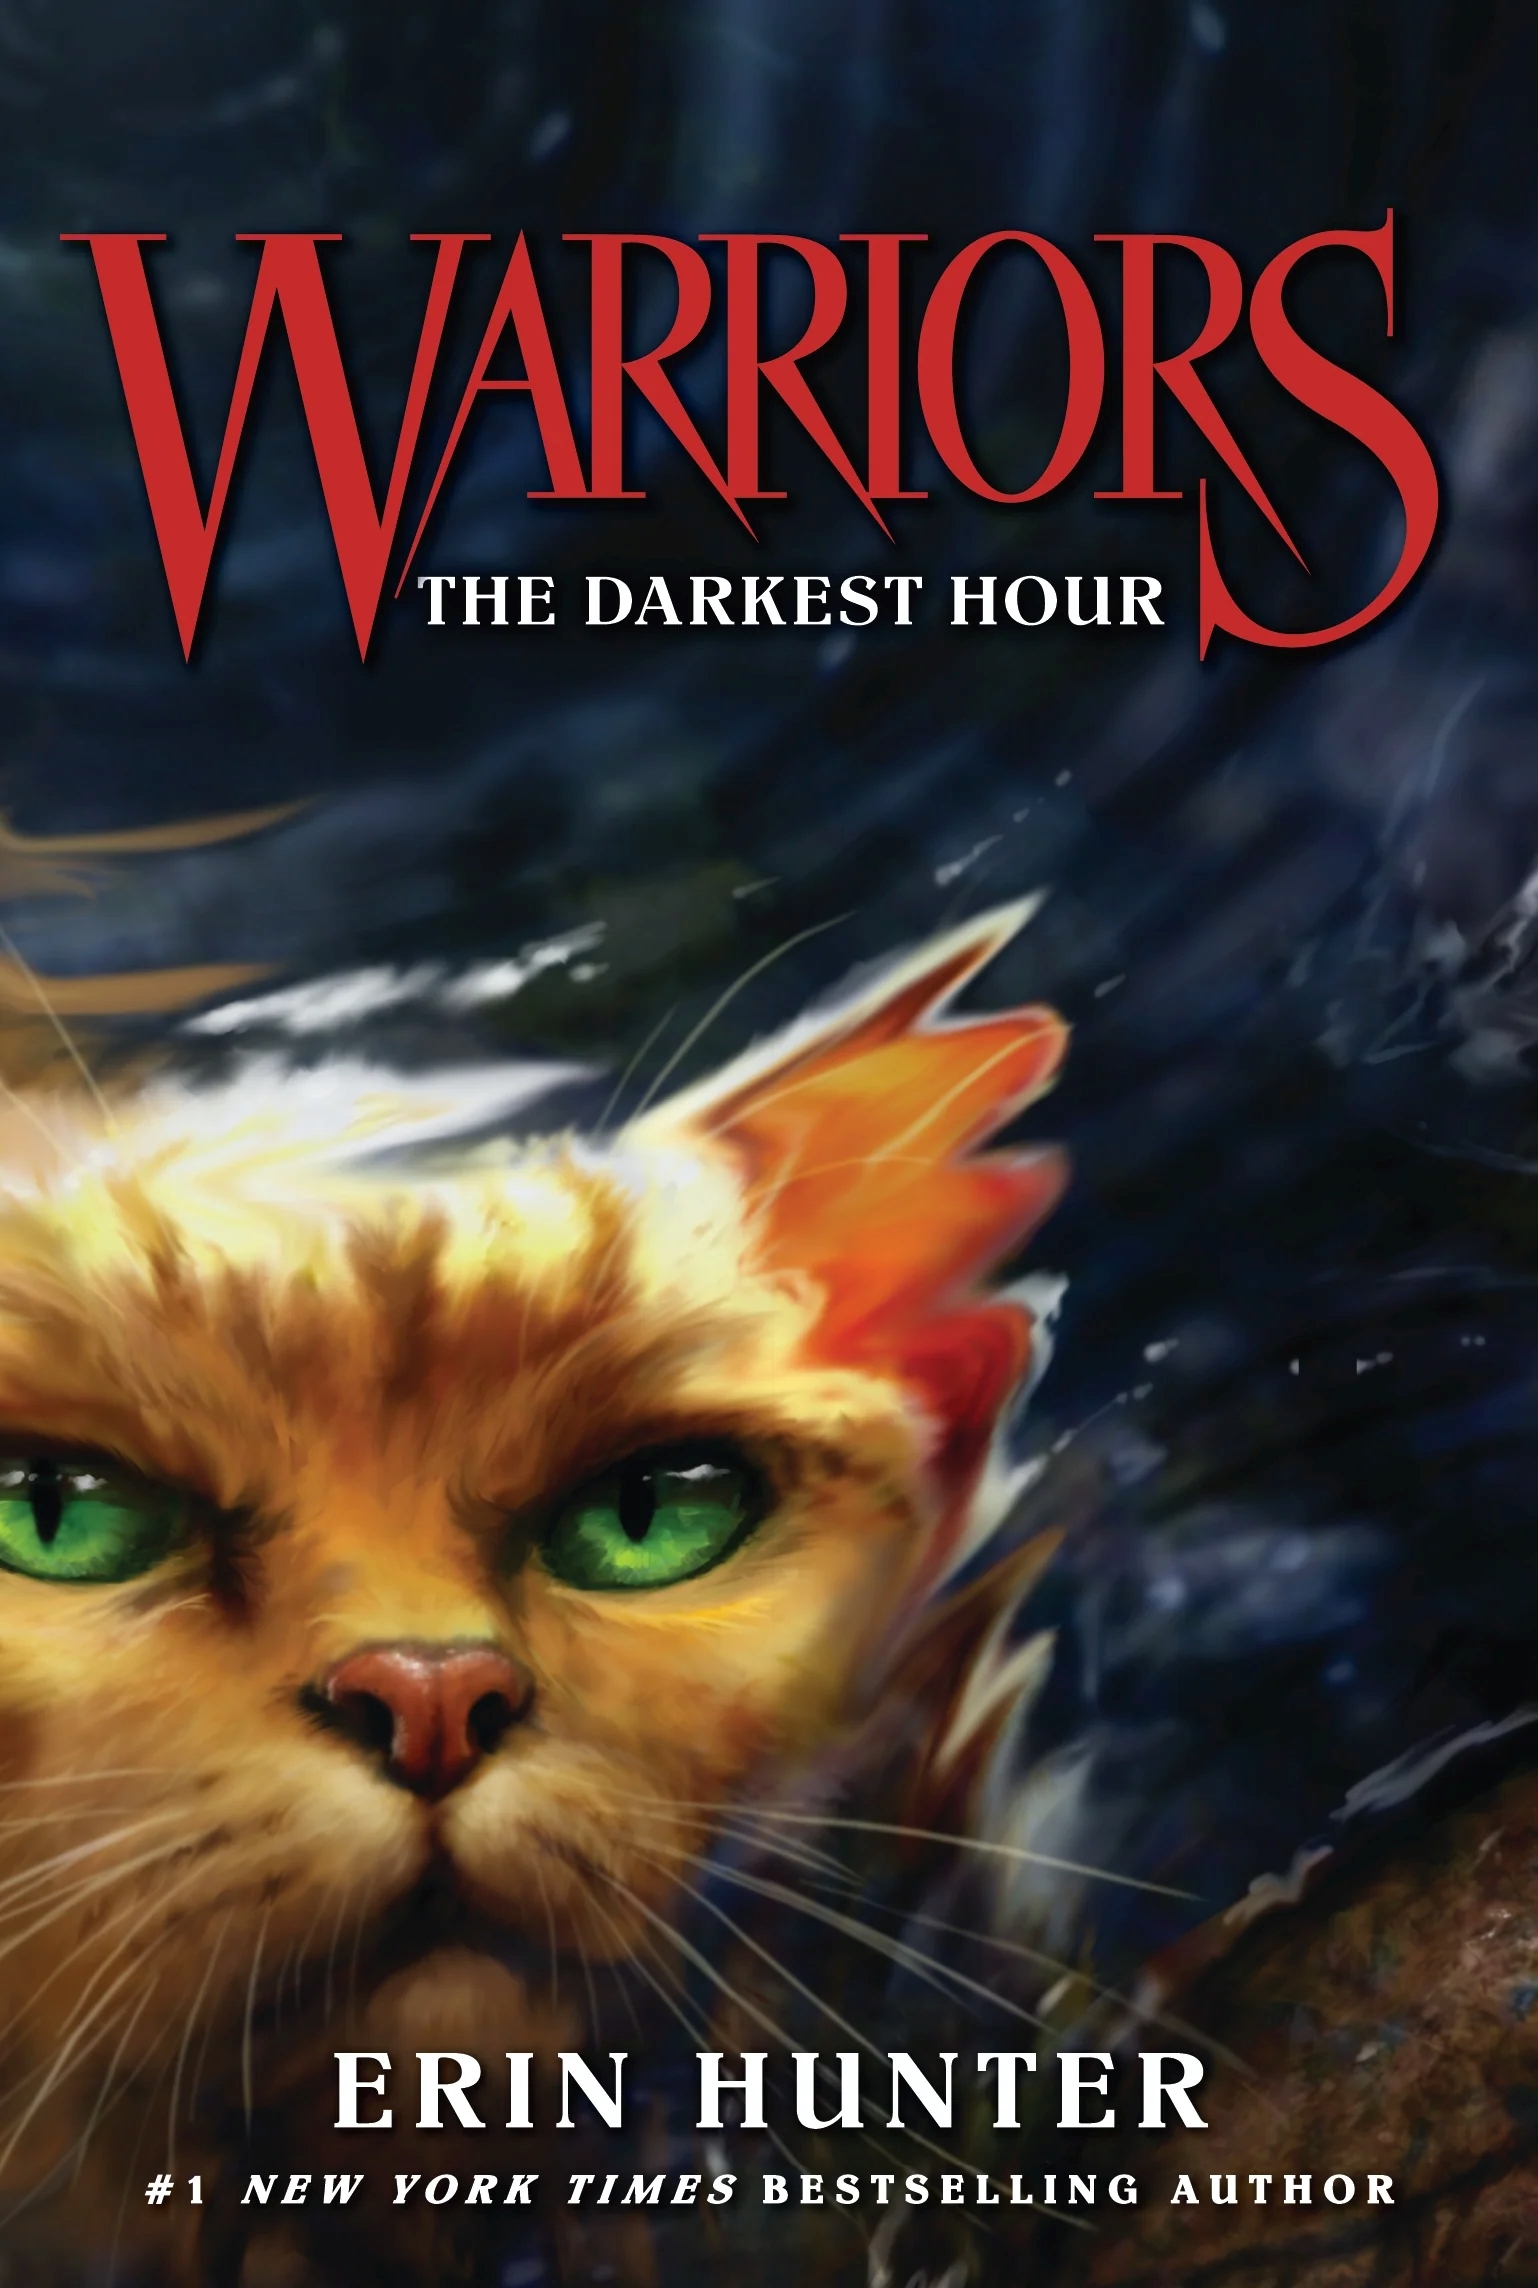 Warriors Super Edition: Riverstar's Home - By Erin Hunter (hardcover) :  Target